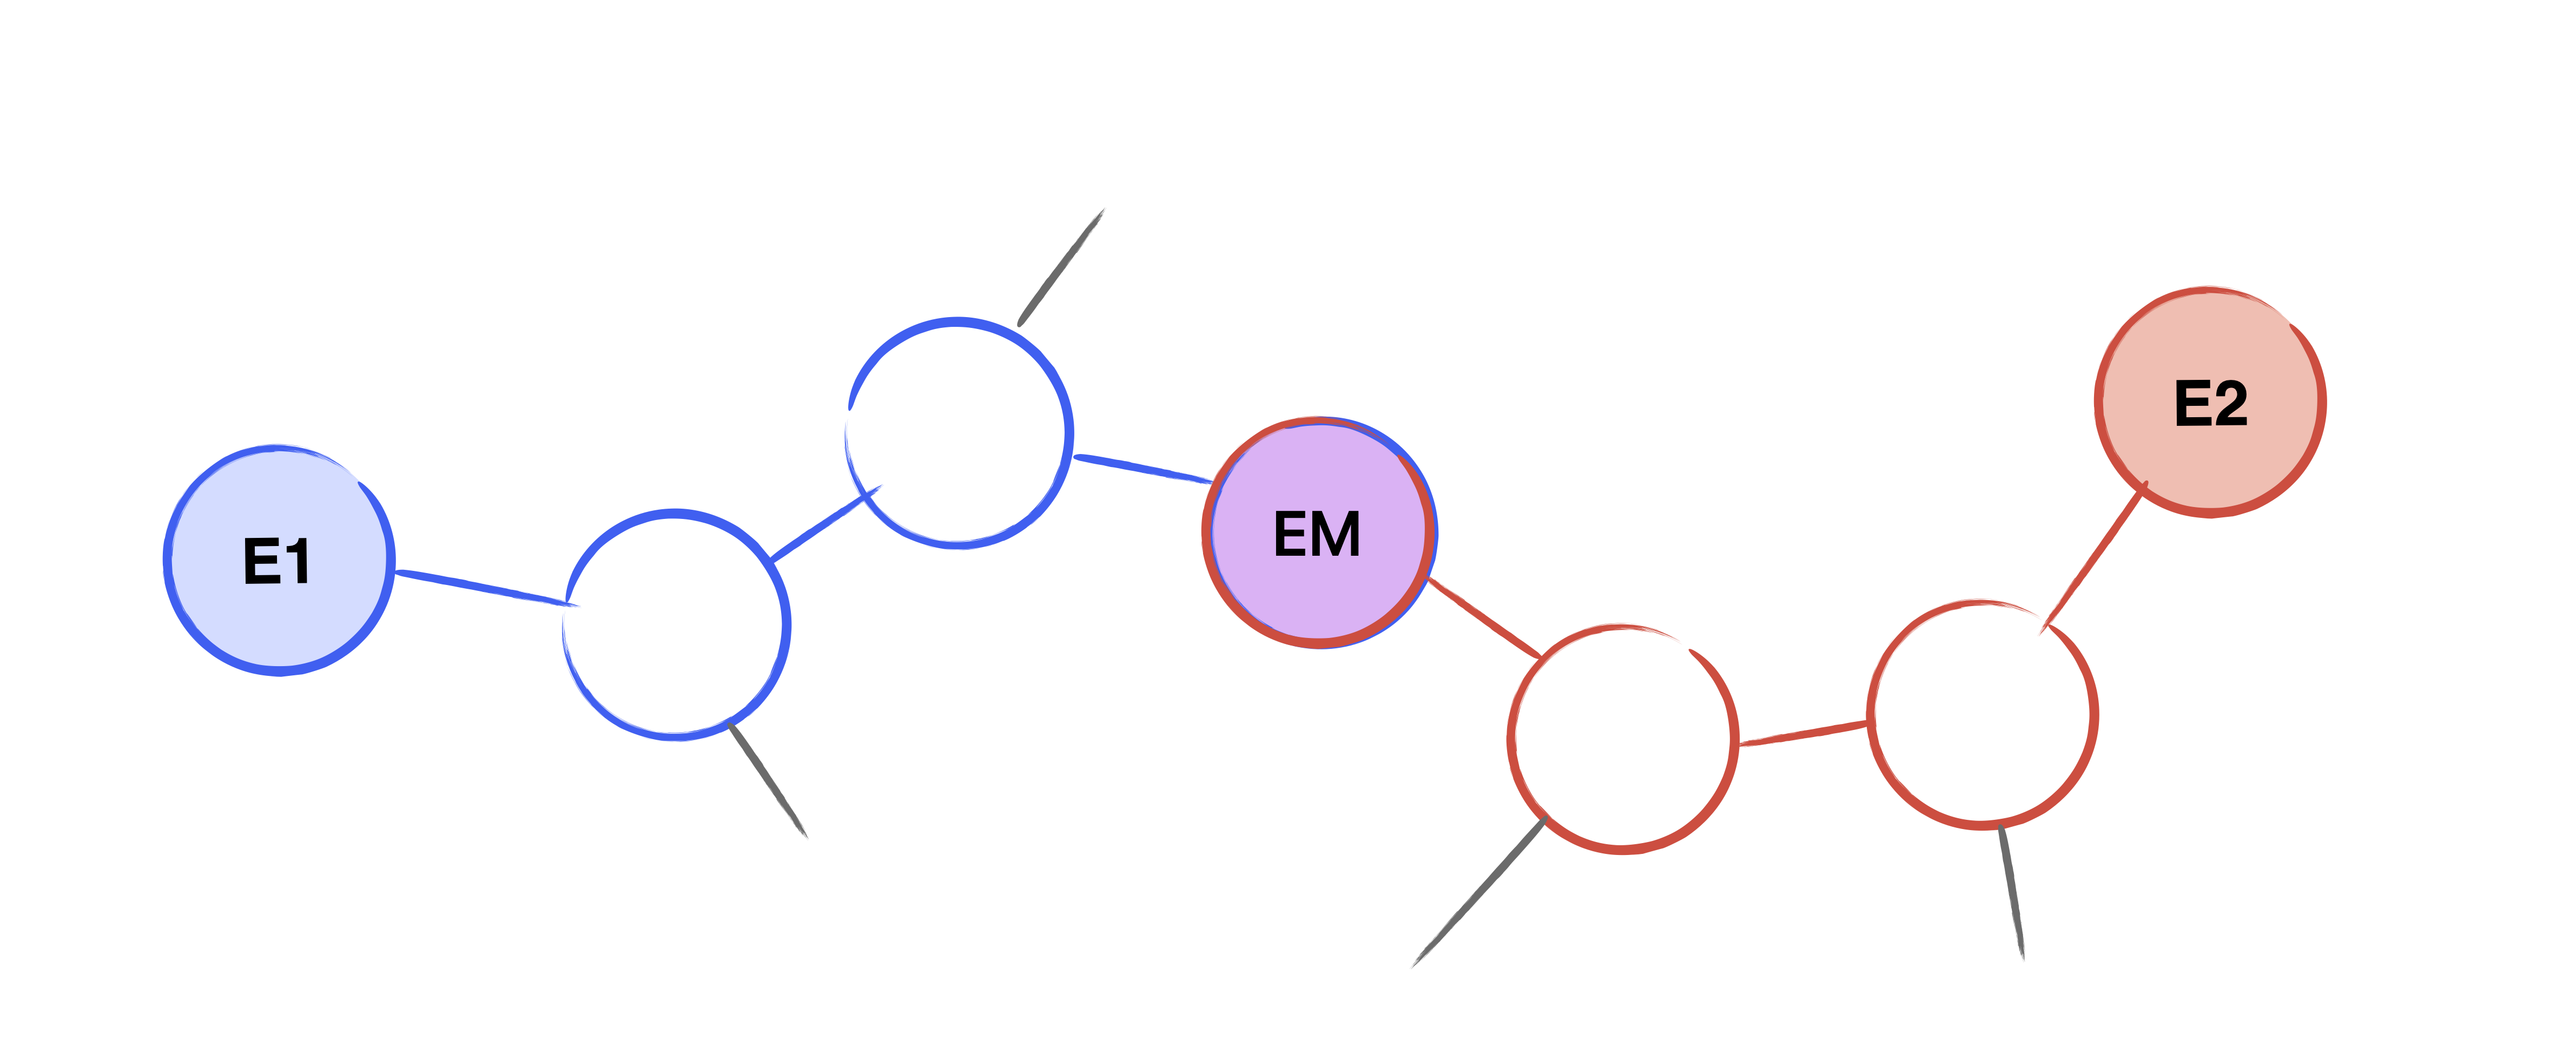 A path from E1 to E2 via the middle curve EM